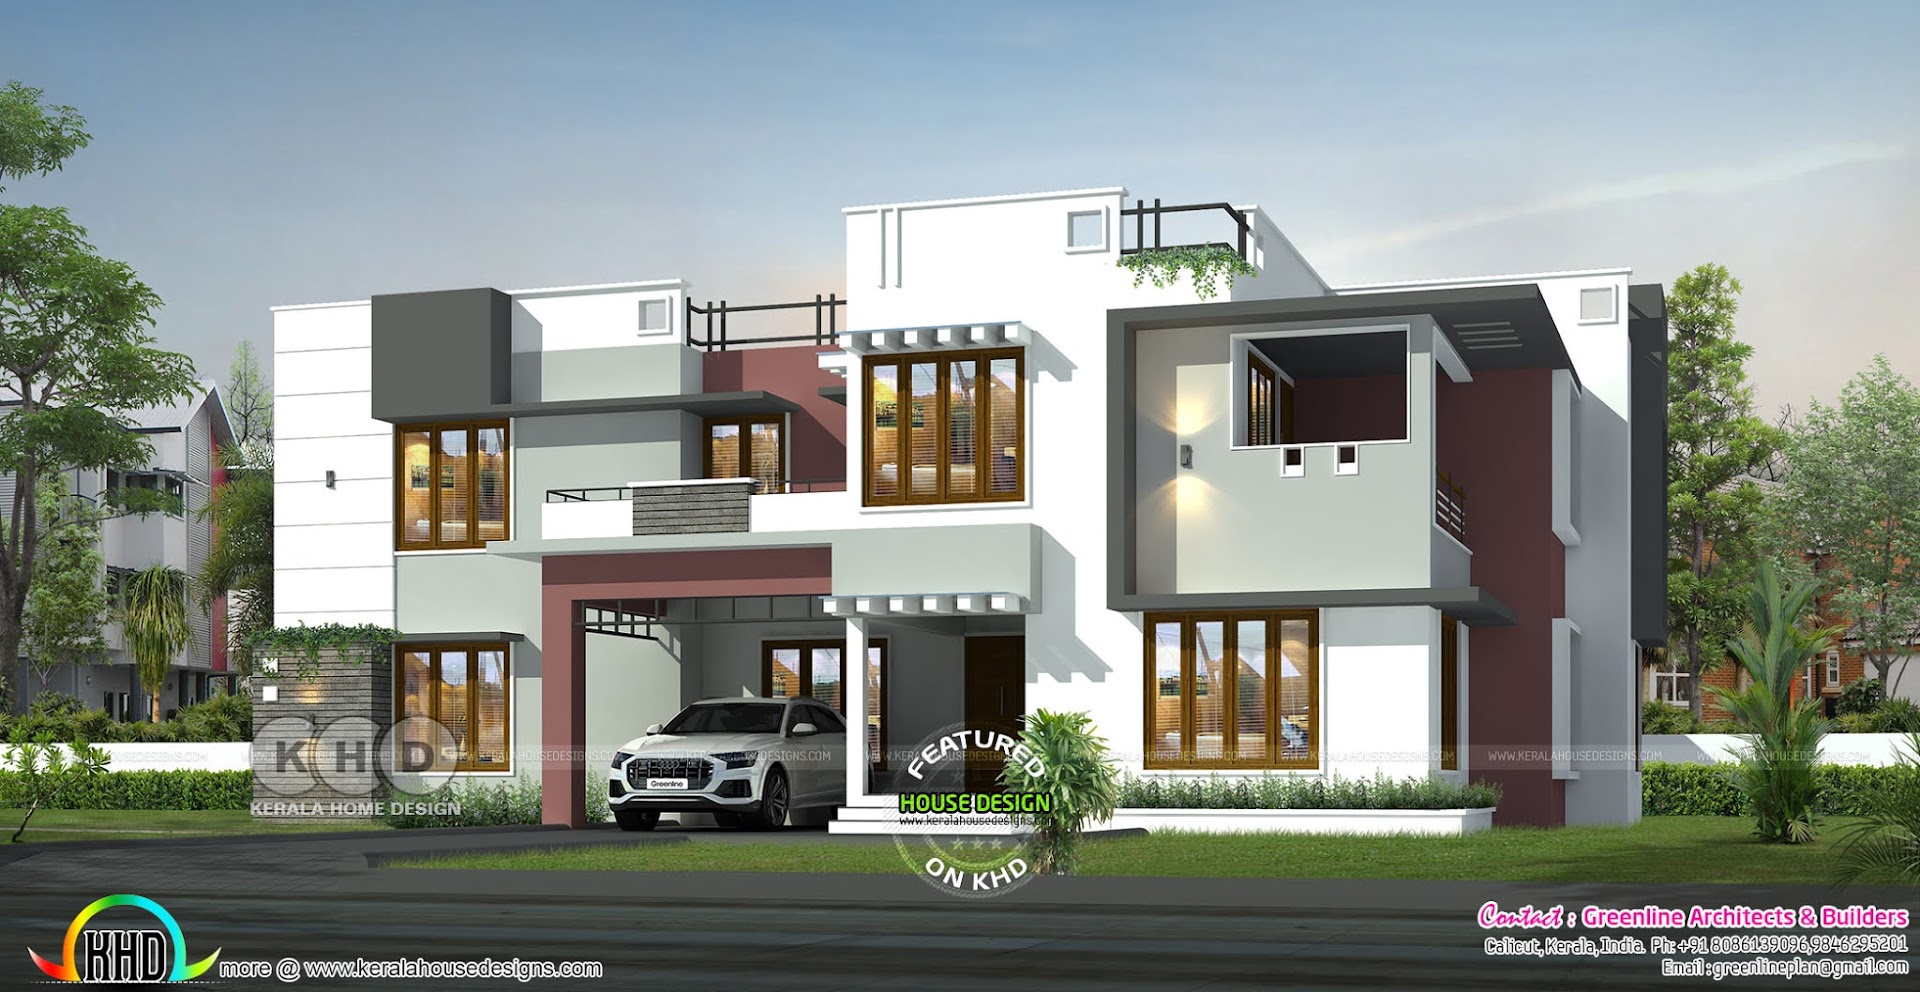 4500 sqft flat roof modern house design Kerala home design and floor plans 8000+ houses